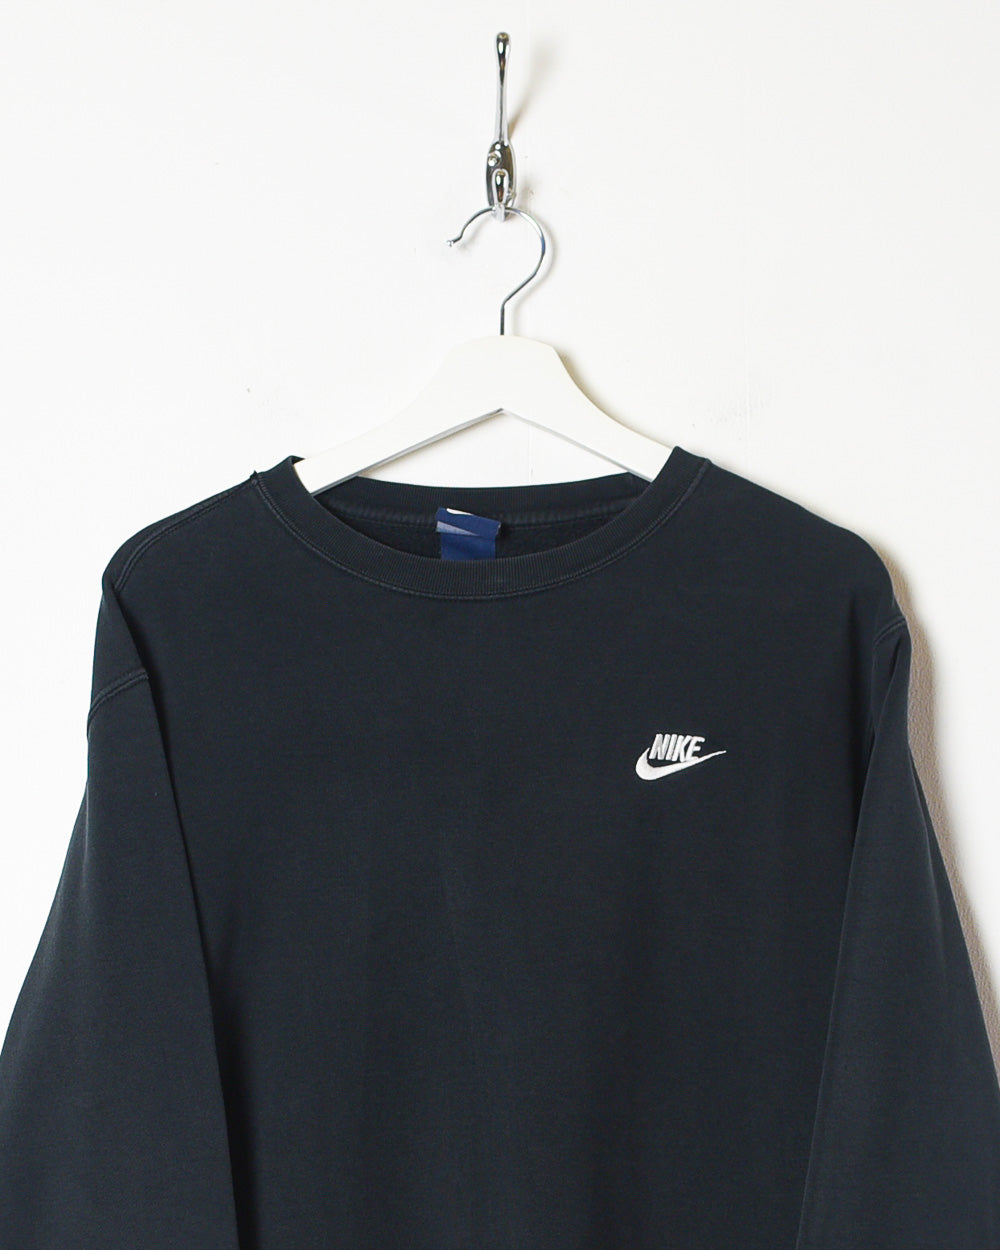 Black Nike Sweatshirt - Medium